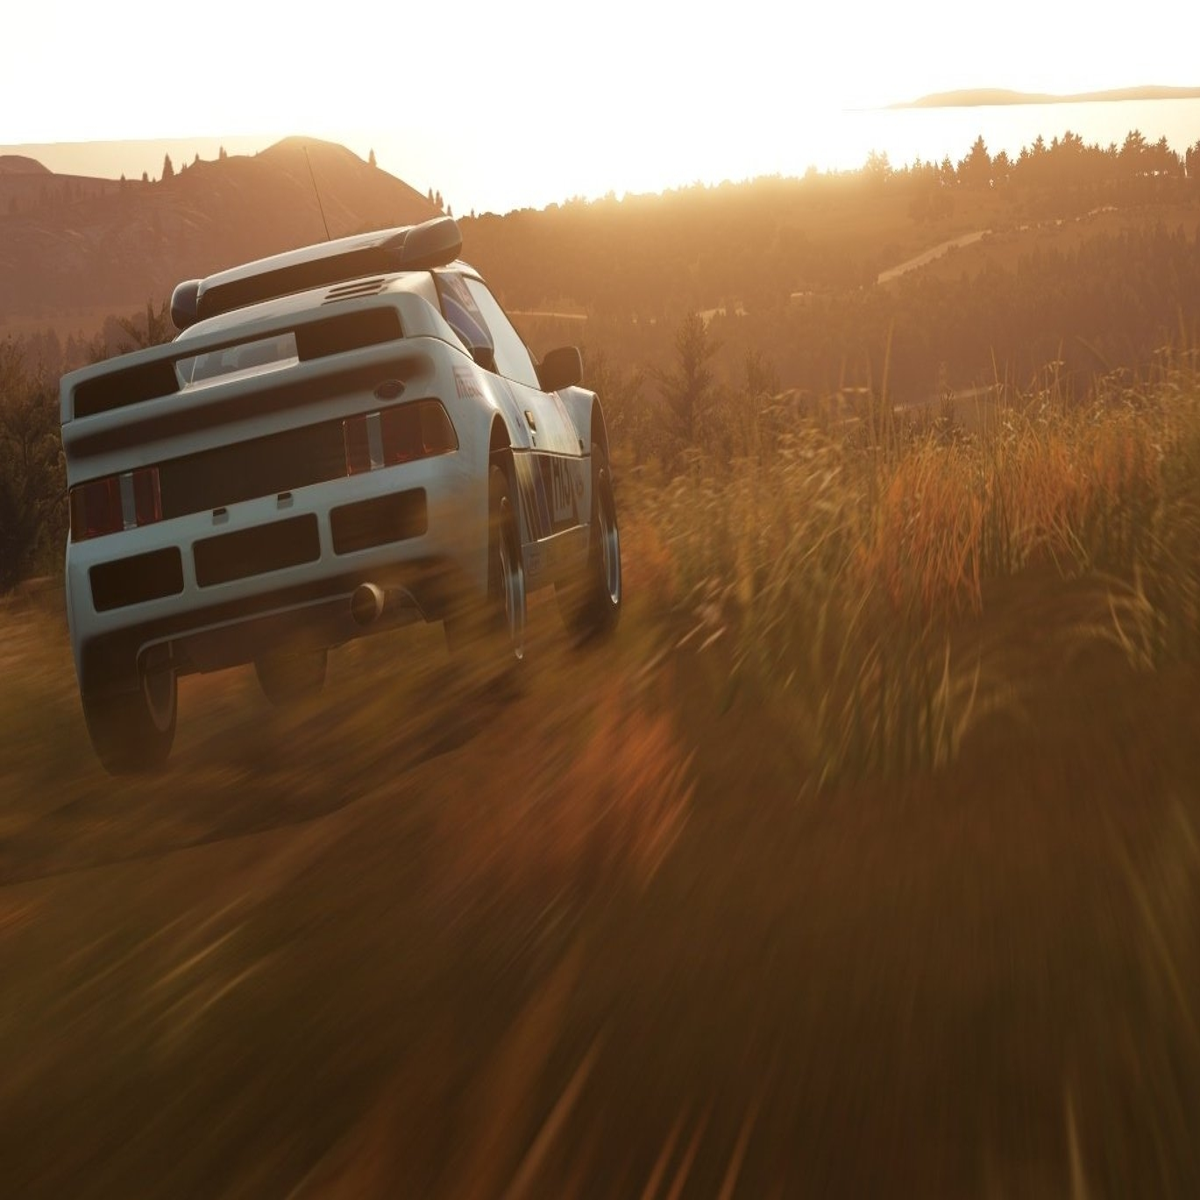 Forza Horizon 2 review: road not taken